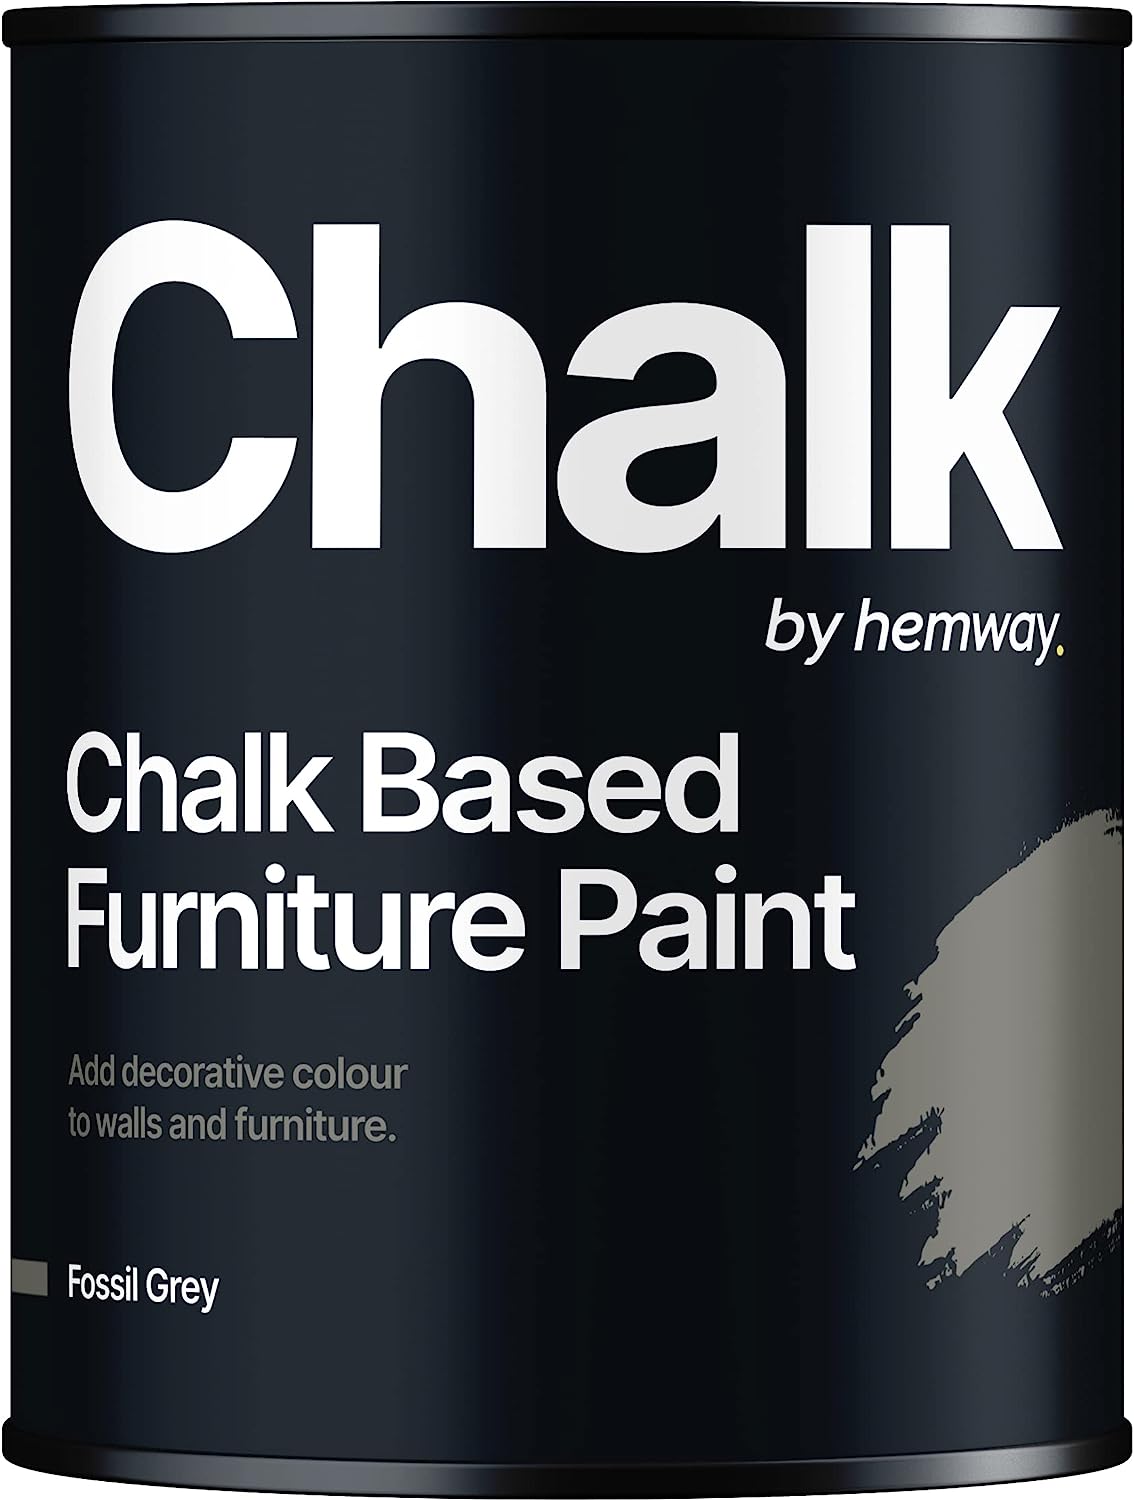 Hemway Fossil Grey Chalk Based Furniture Paint 1L [...]